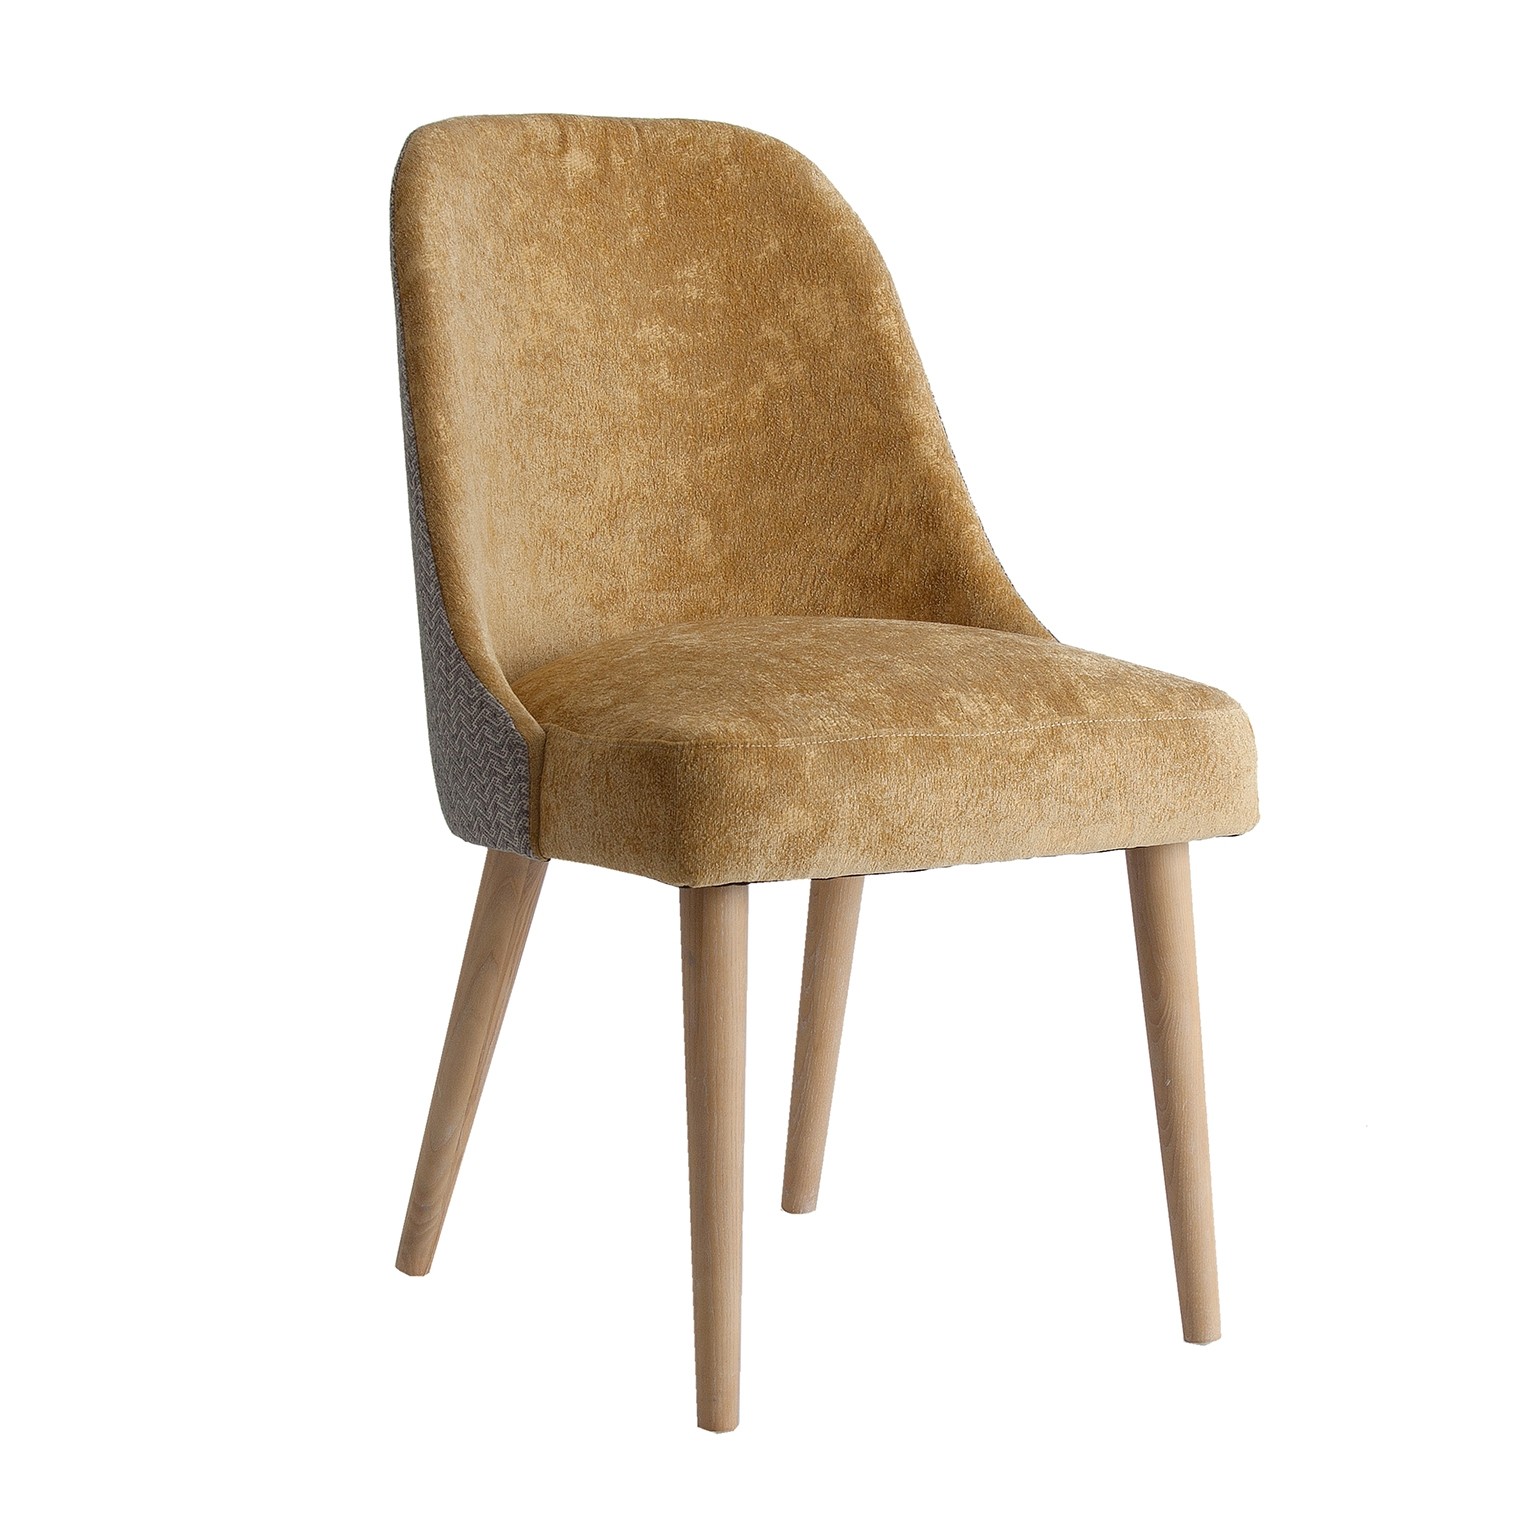 Estila Art-deco luxusná horčicová stolička Lage s drevenými nohami 87cm